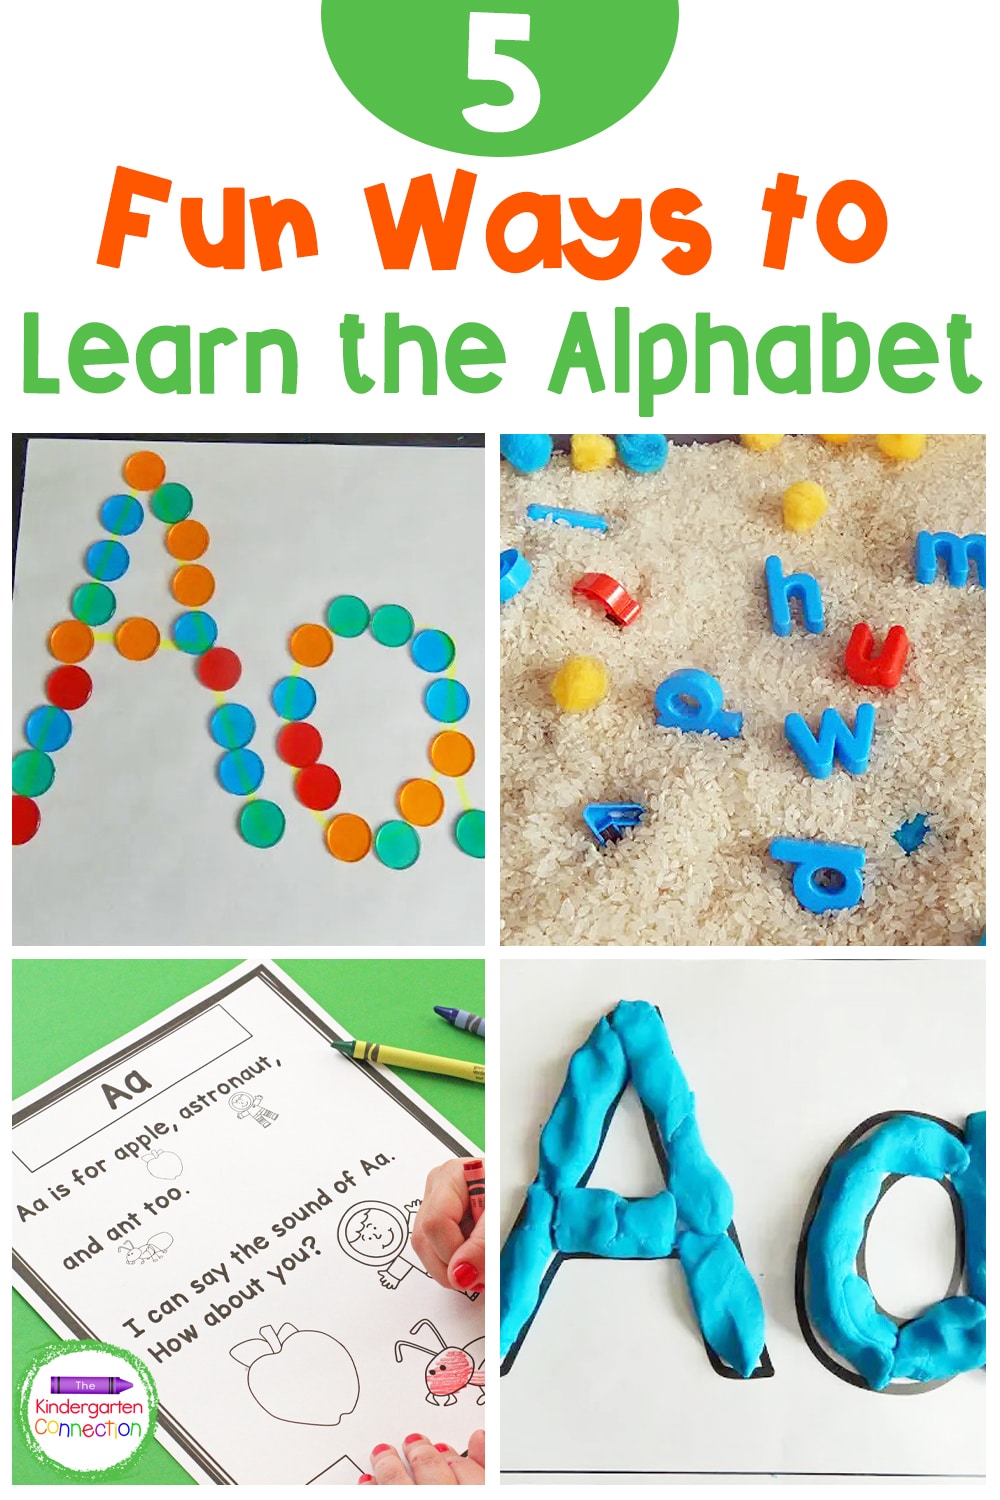 5 FUN Ways to Learn the Alphabet